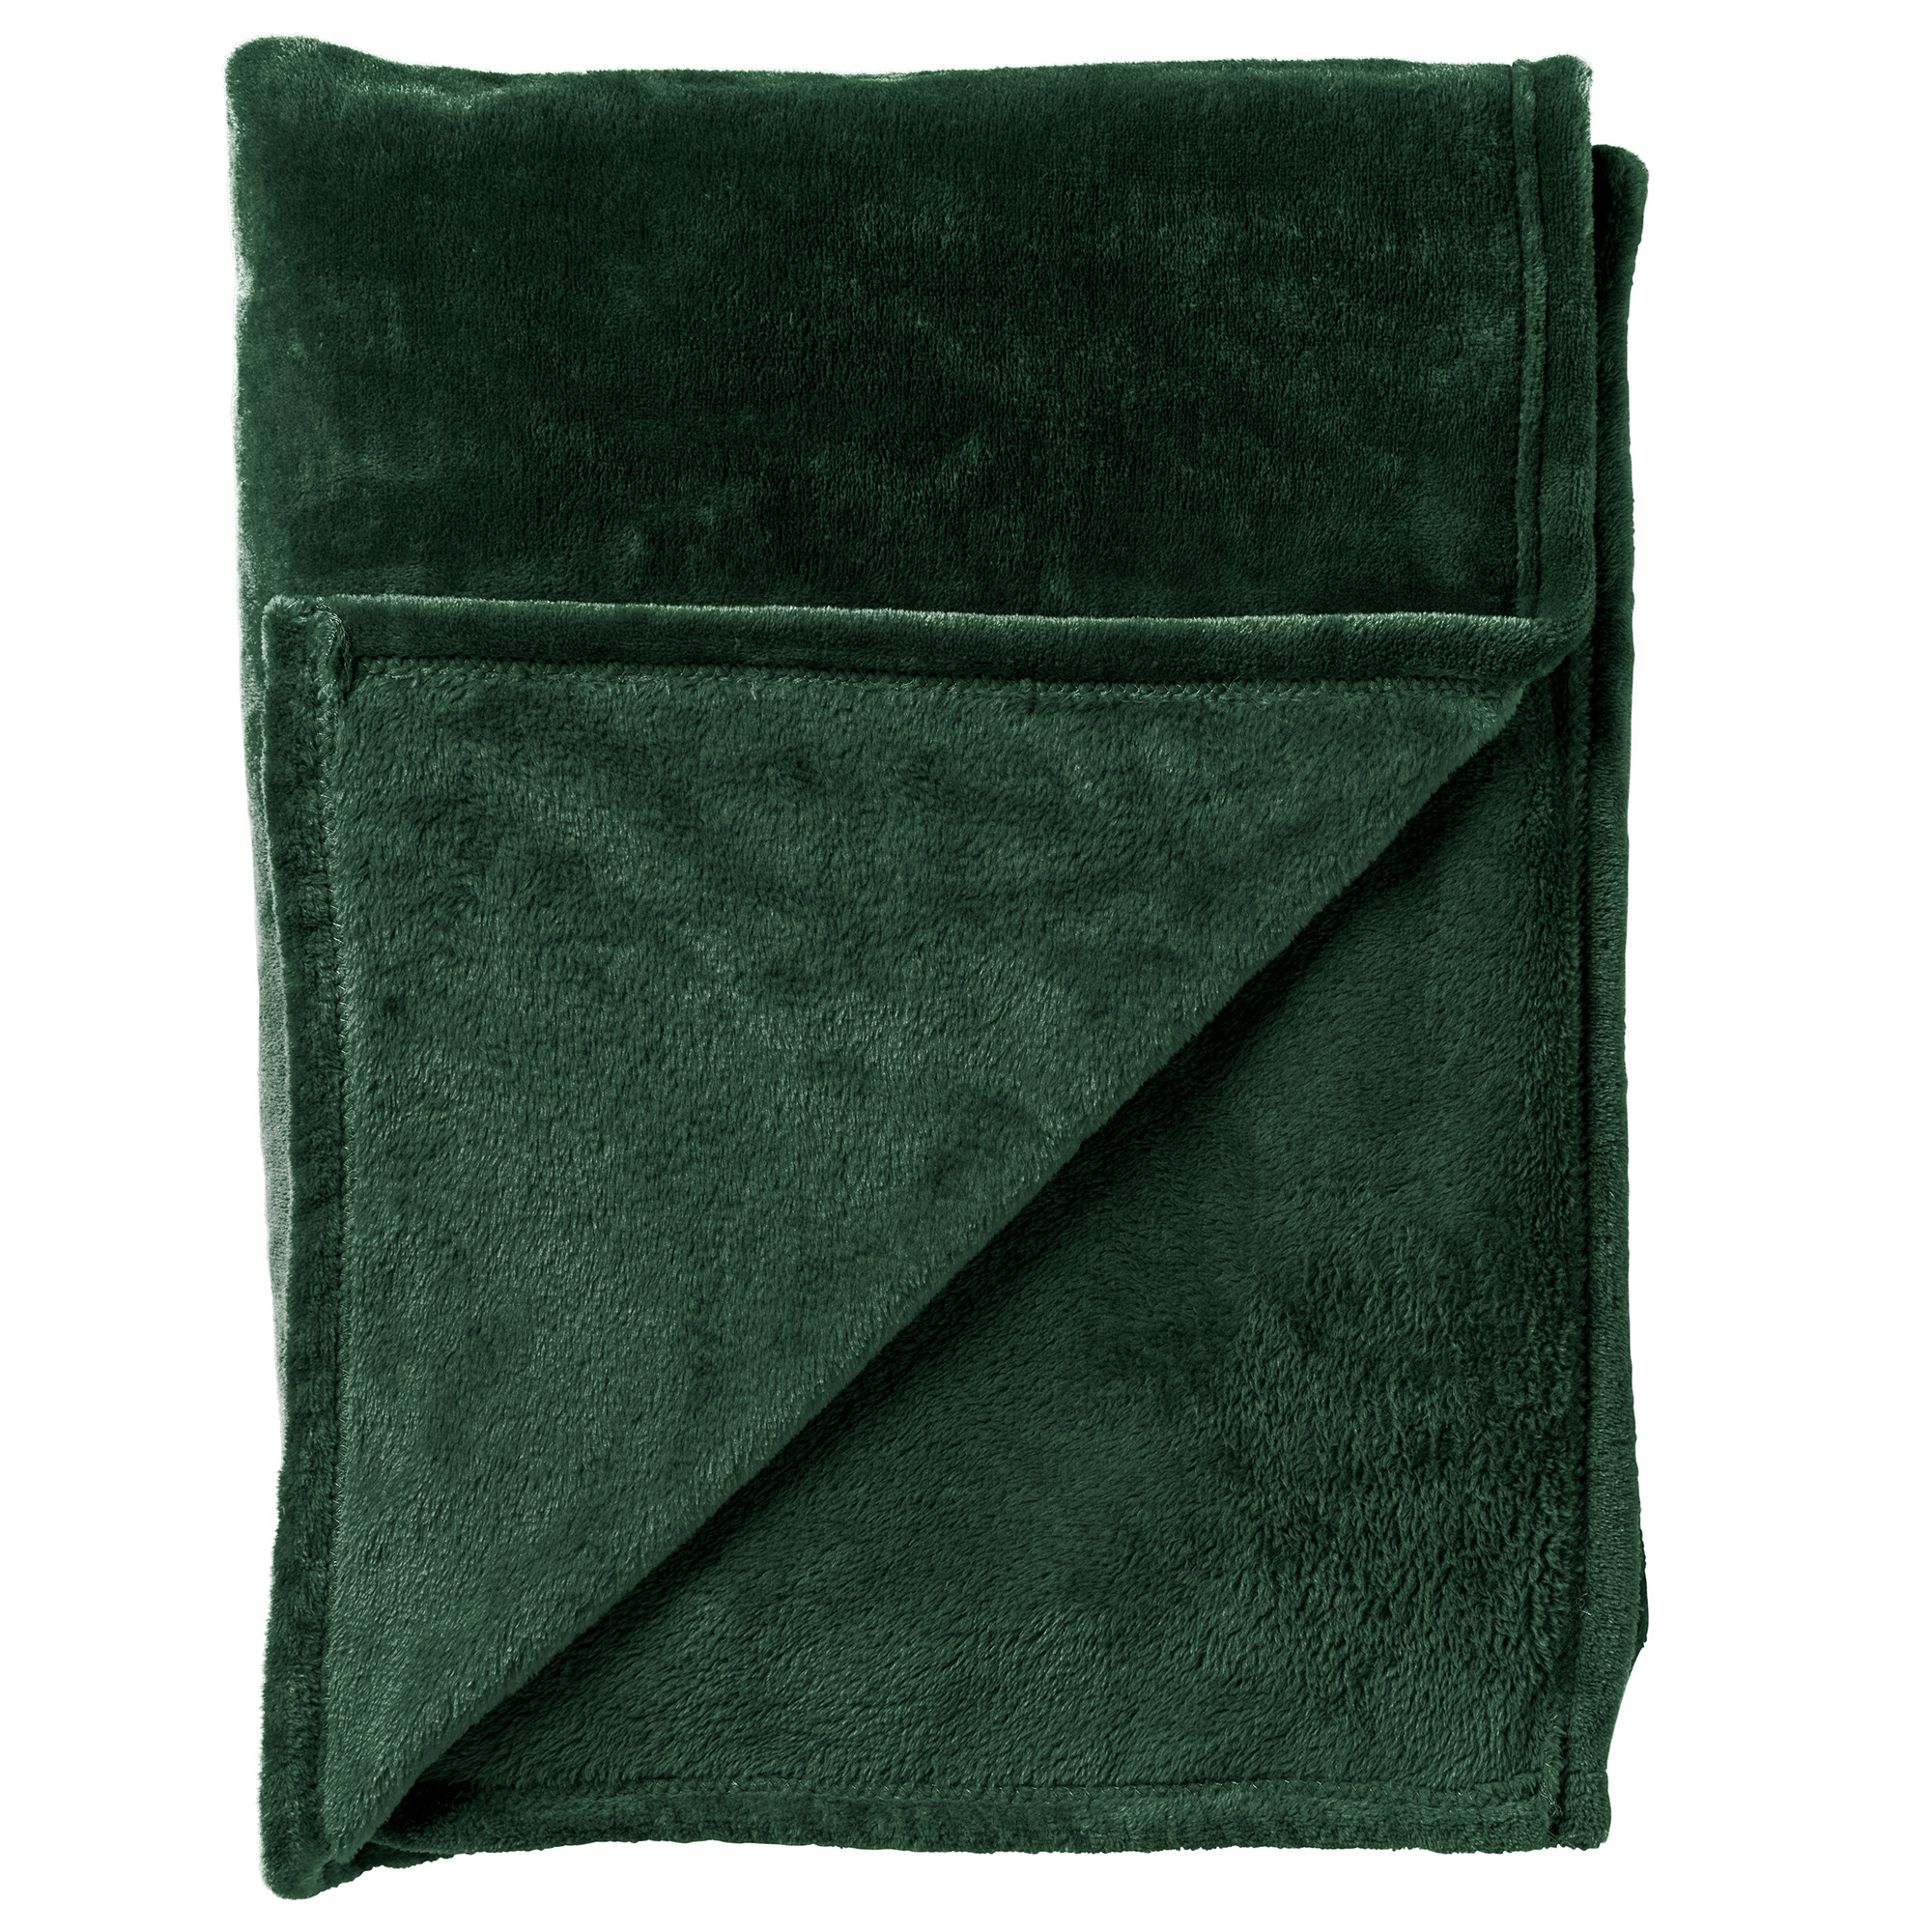 CHARLIE - Plaid flannel fleece XL - 200x220 cm - Mountain View - groen | Plaid DDL0911100456